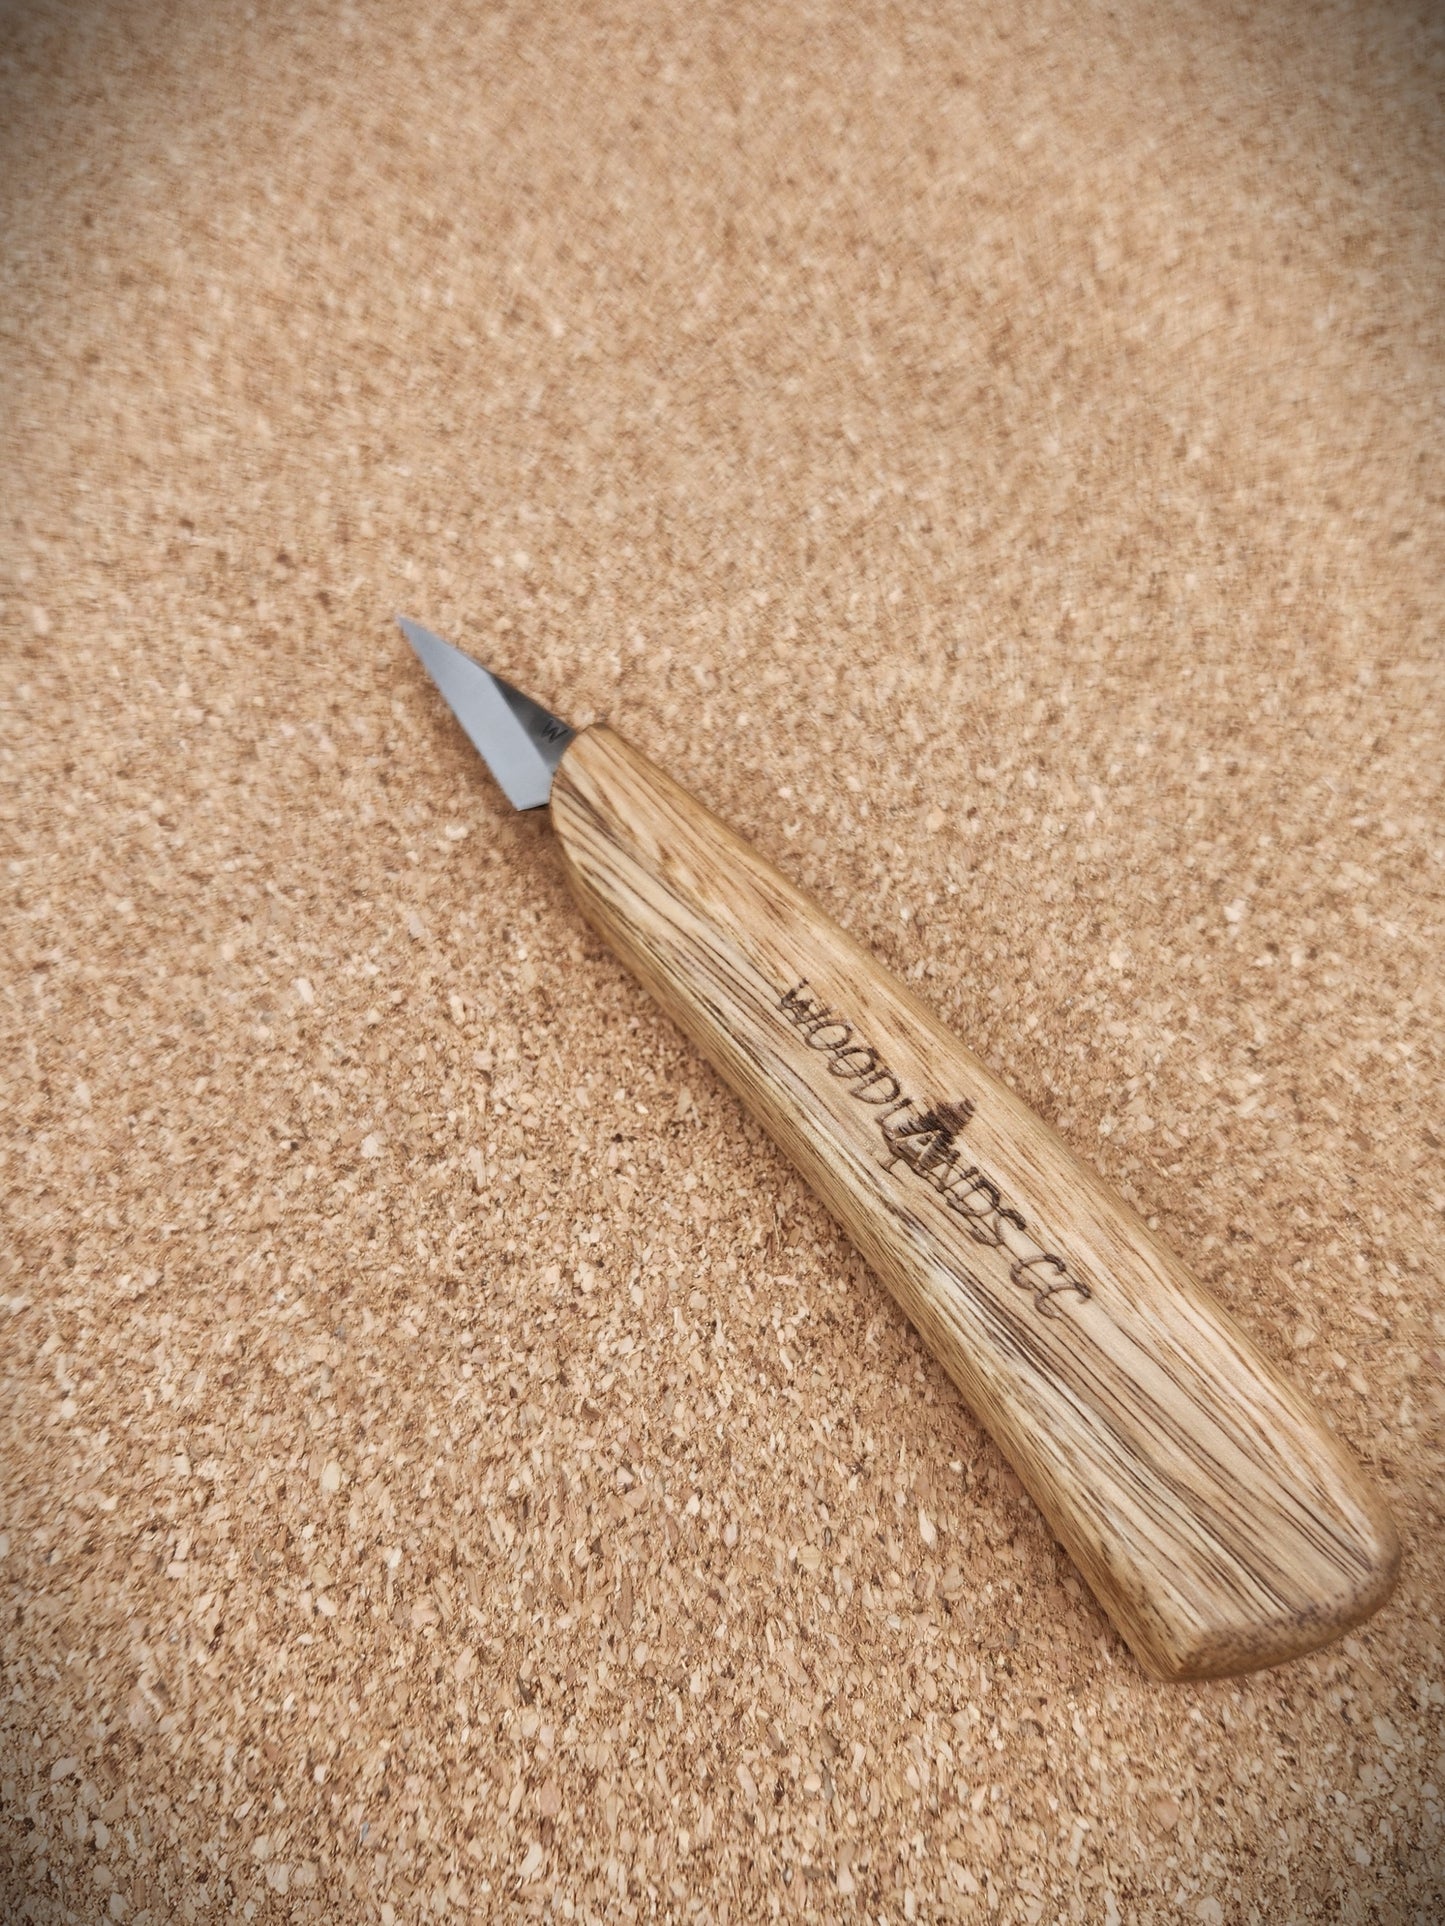 Woodlands cc "Artisan" Detailing Knife